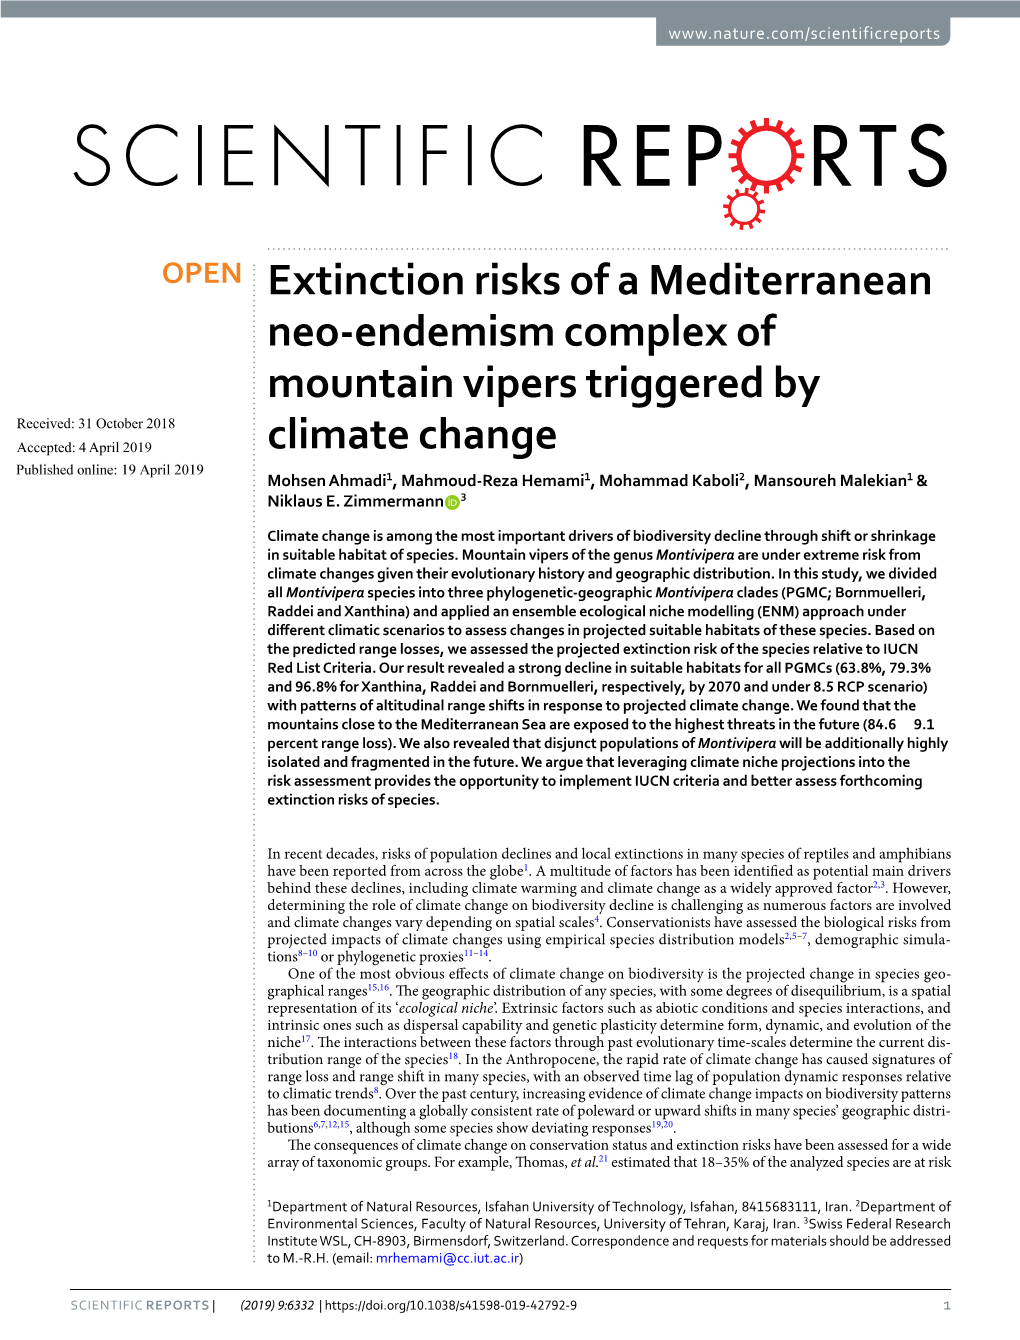 Extinction Risks of a Mediterranean Neo-Endemism Complex Of